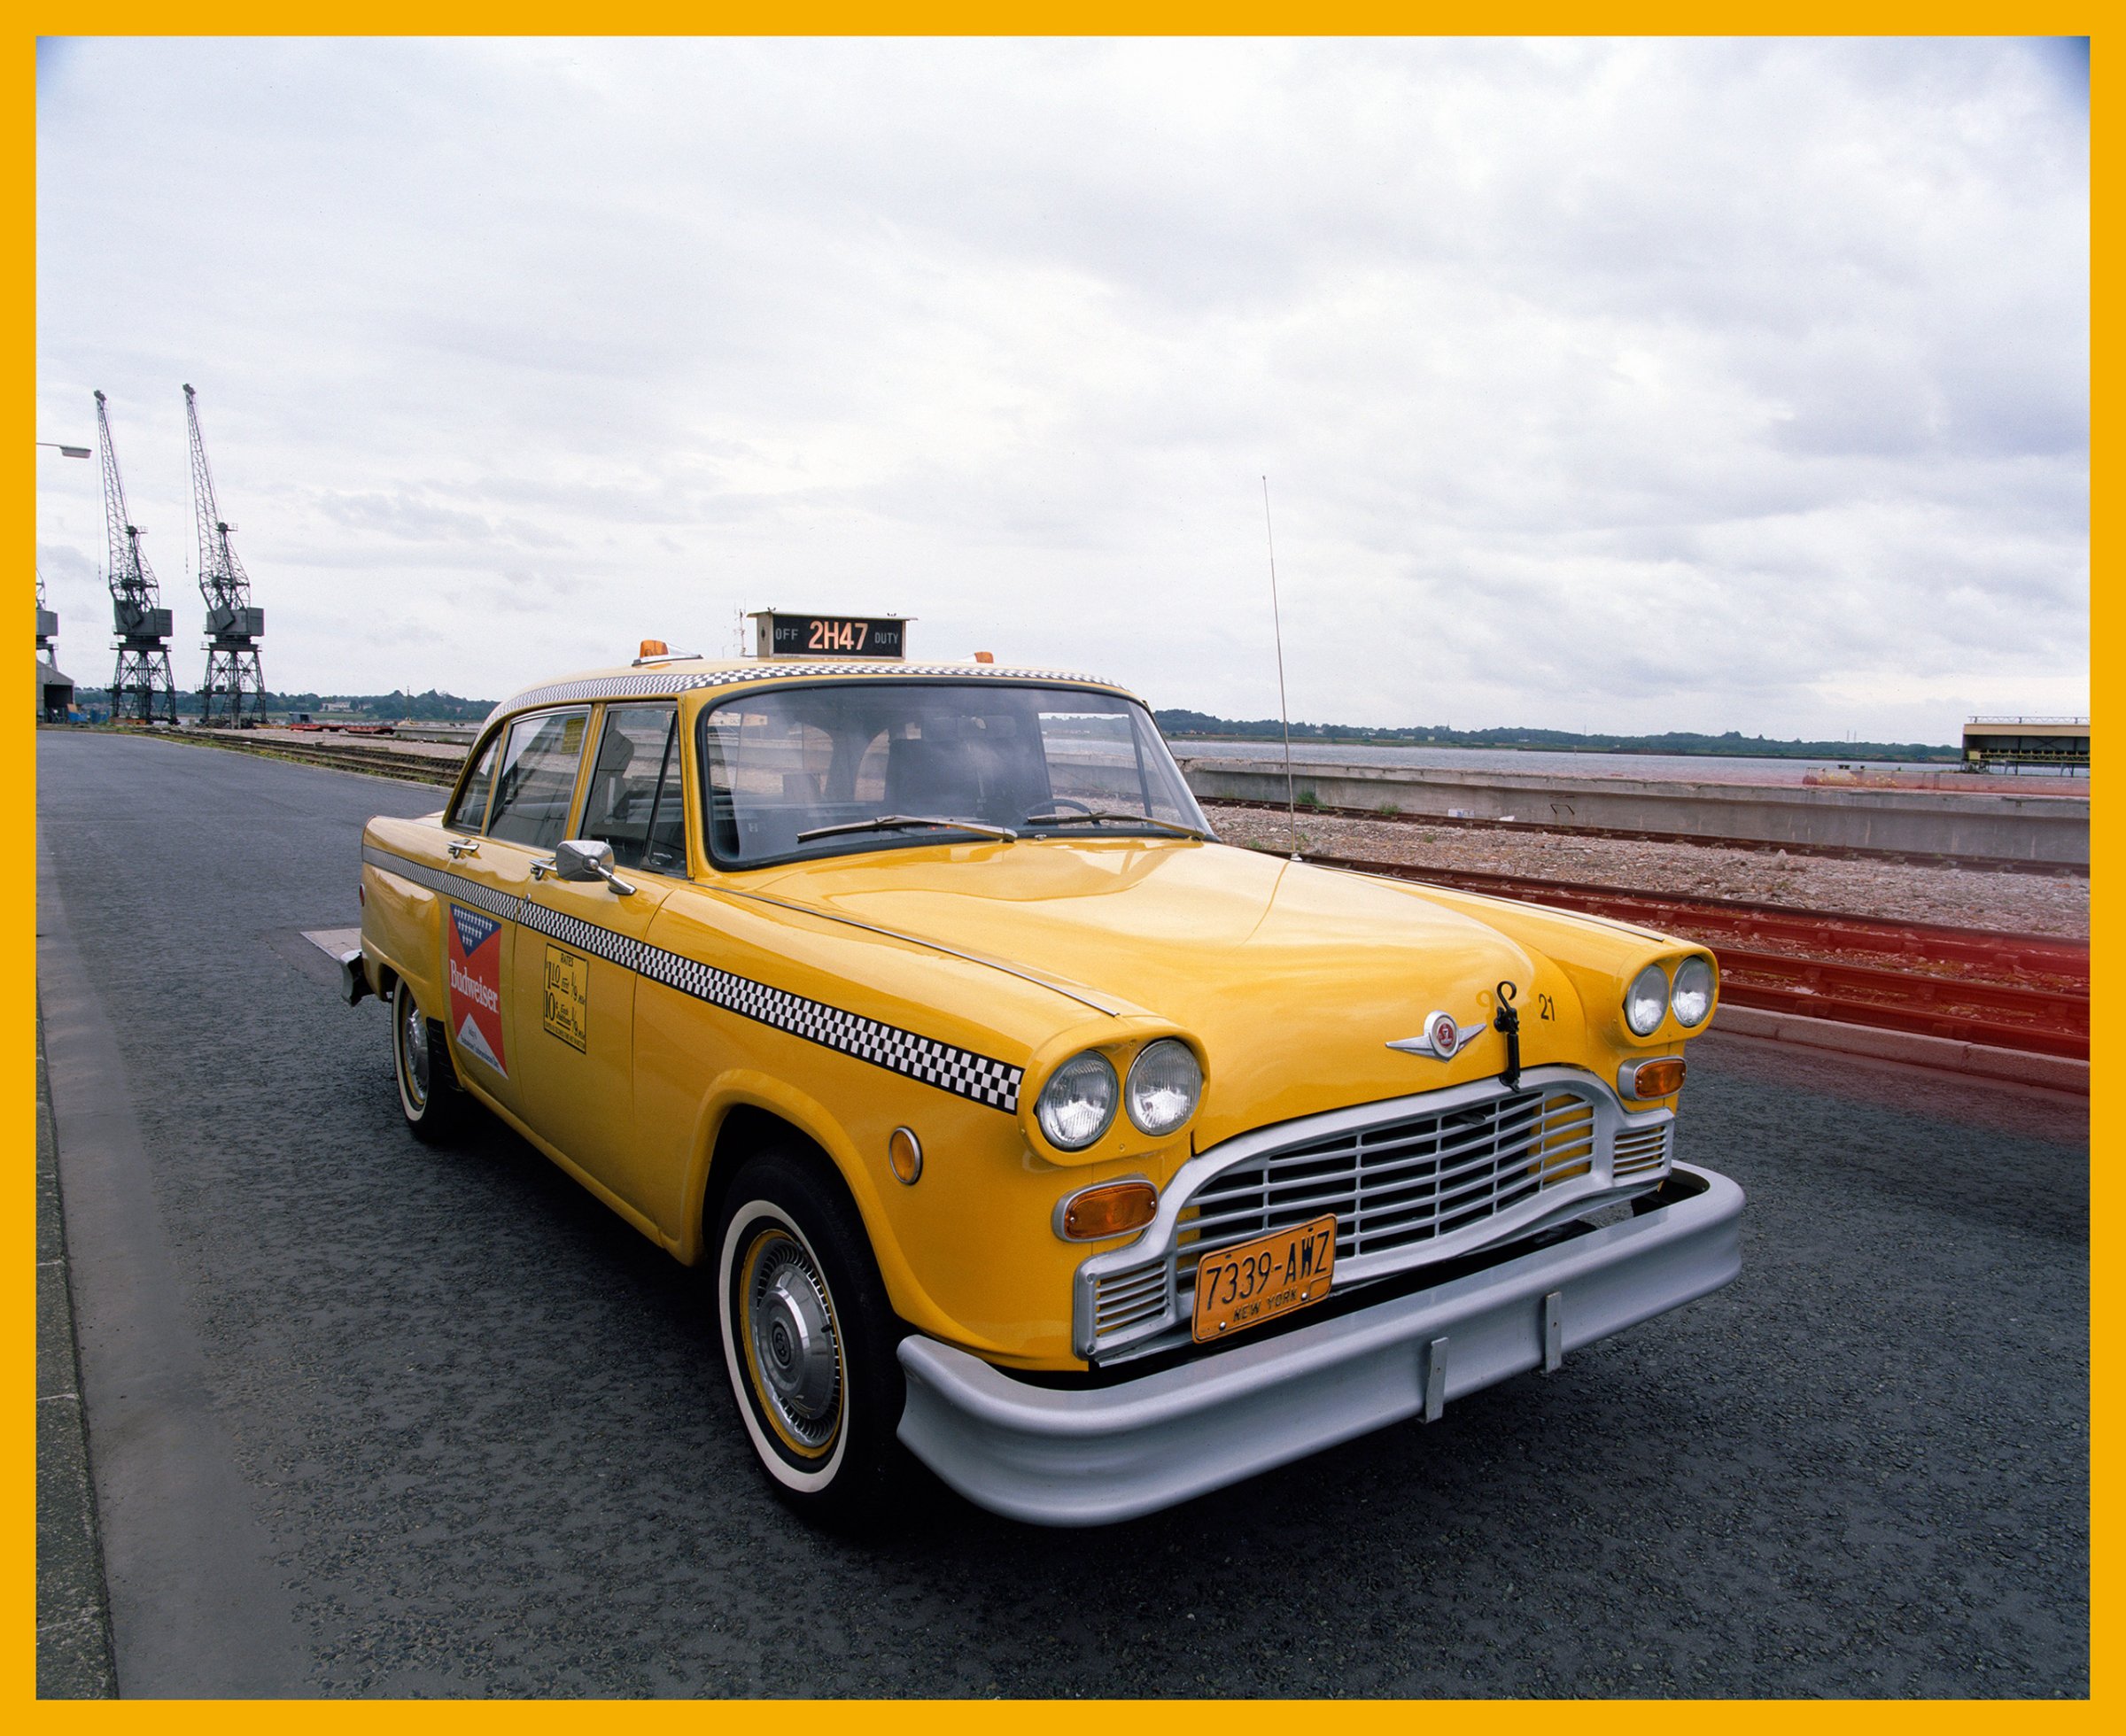 Checker A11 cab, 1980 in New York City.